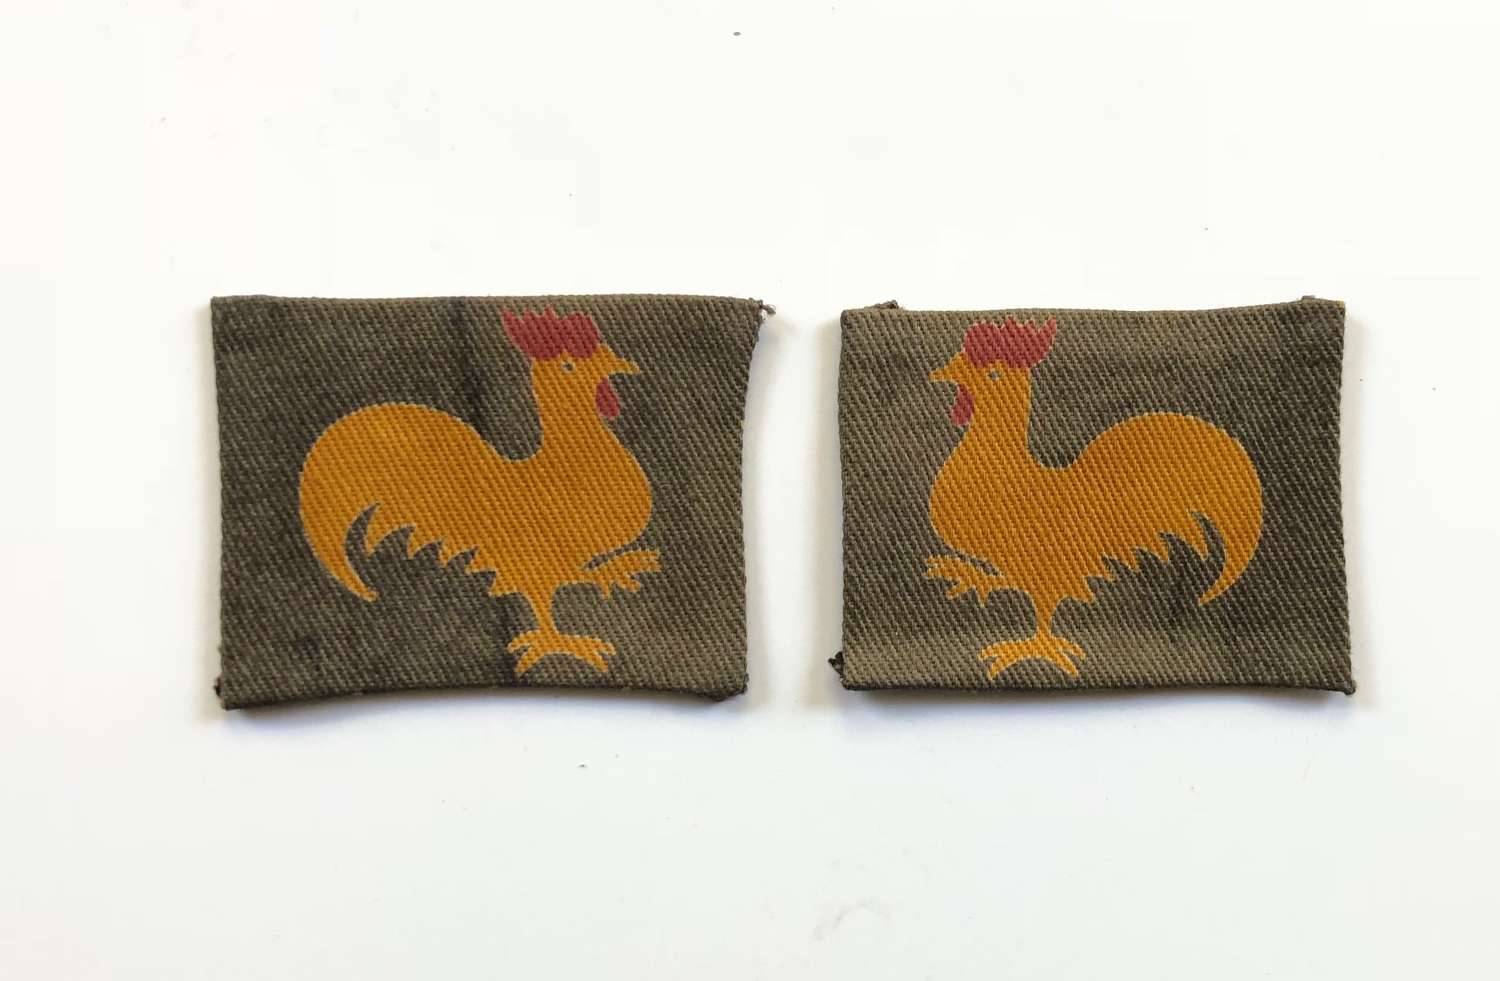 British Army 40th Division Korean War Printed Formation Badges.